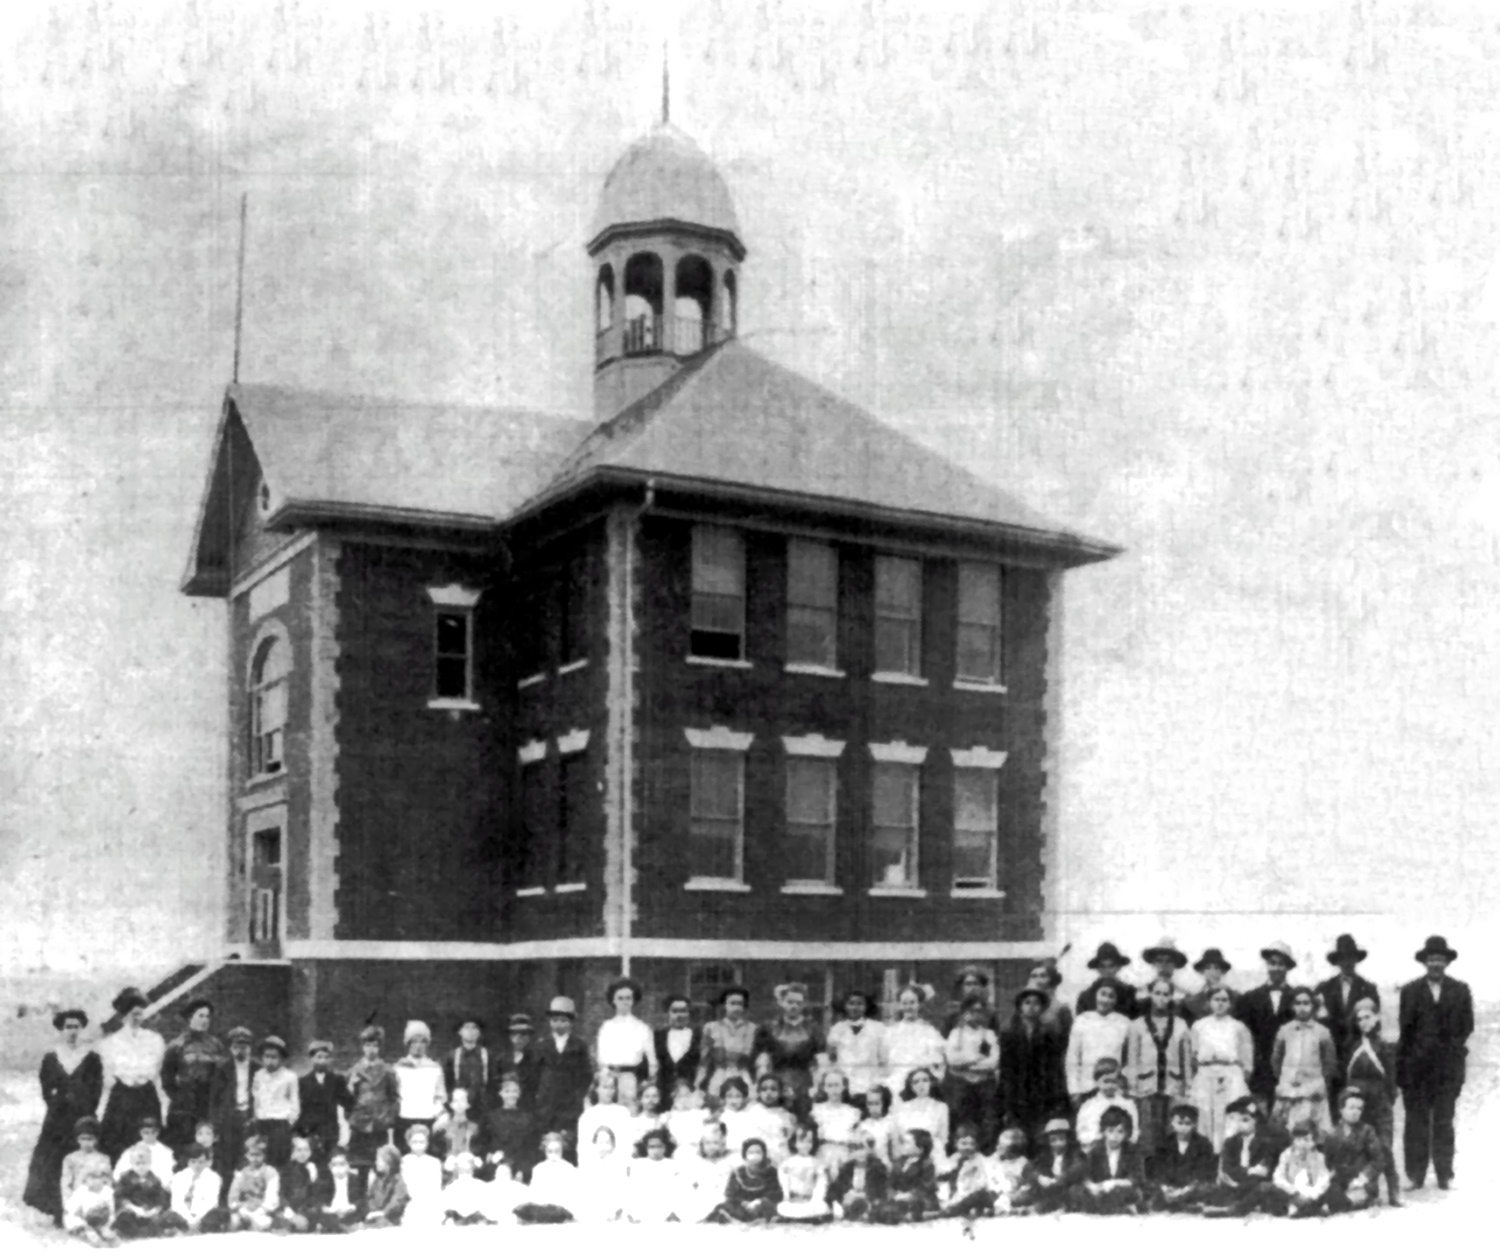 1909 Building